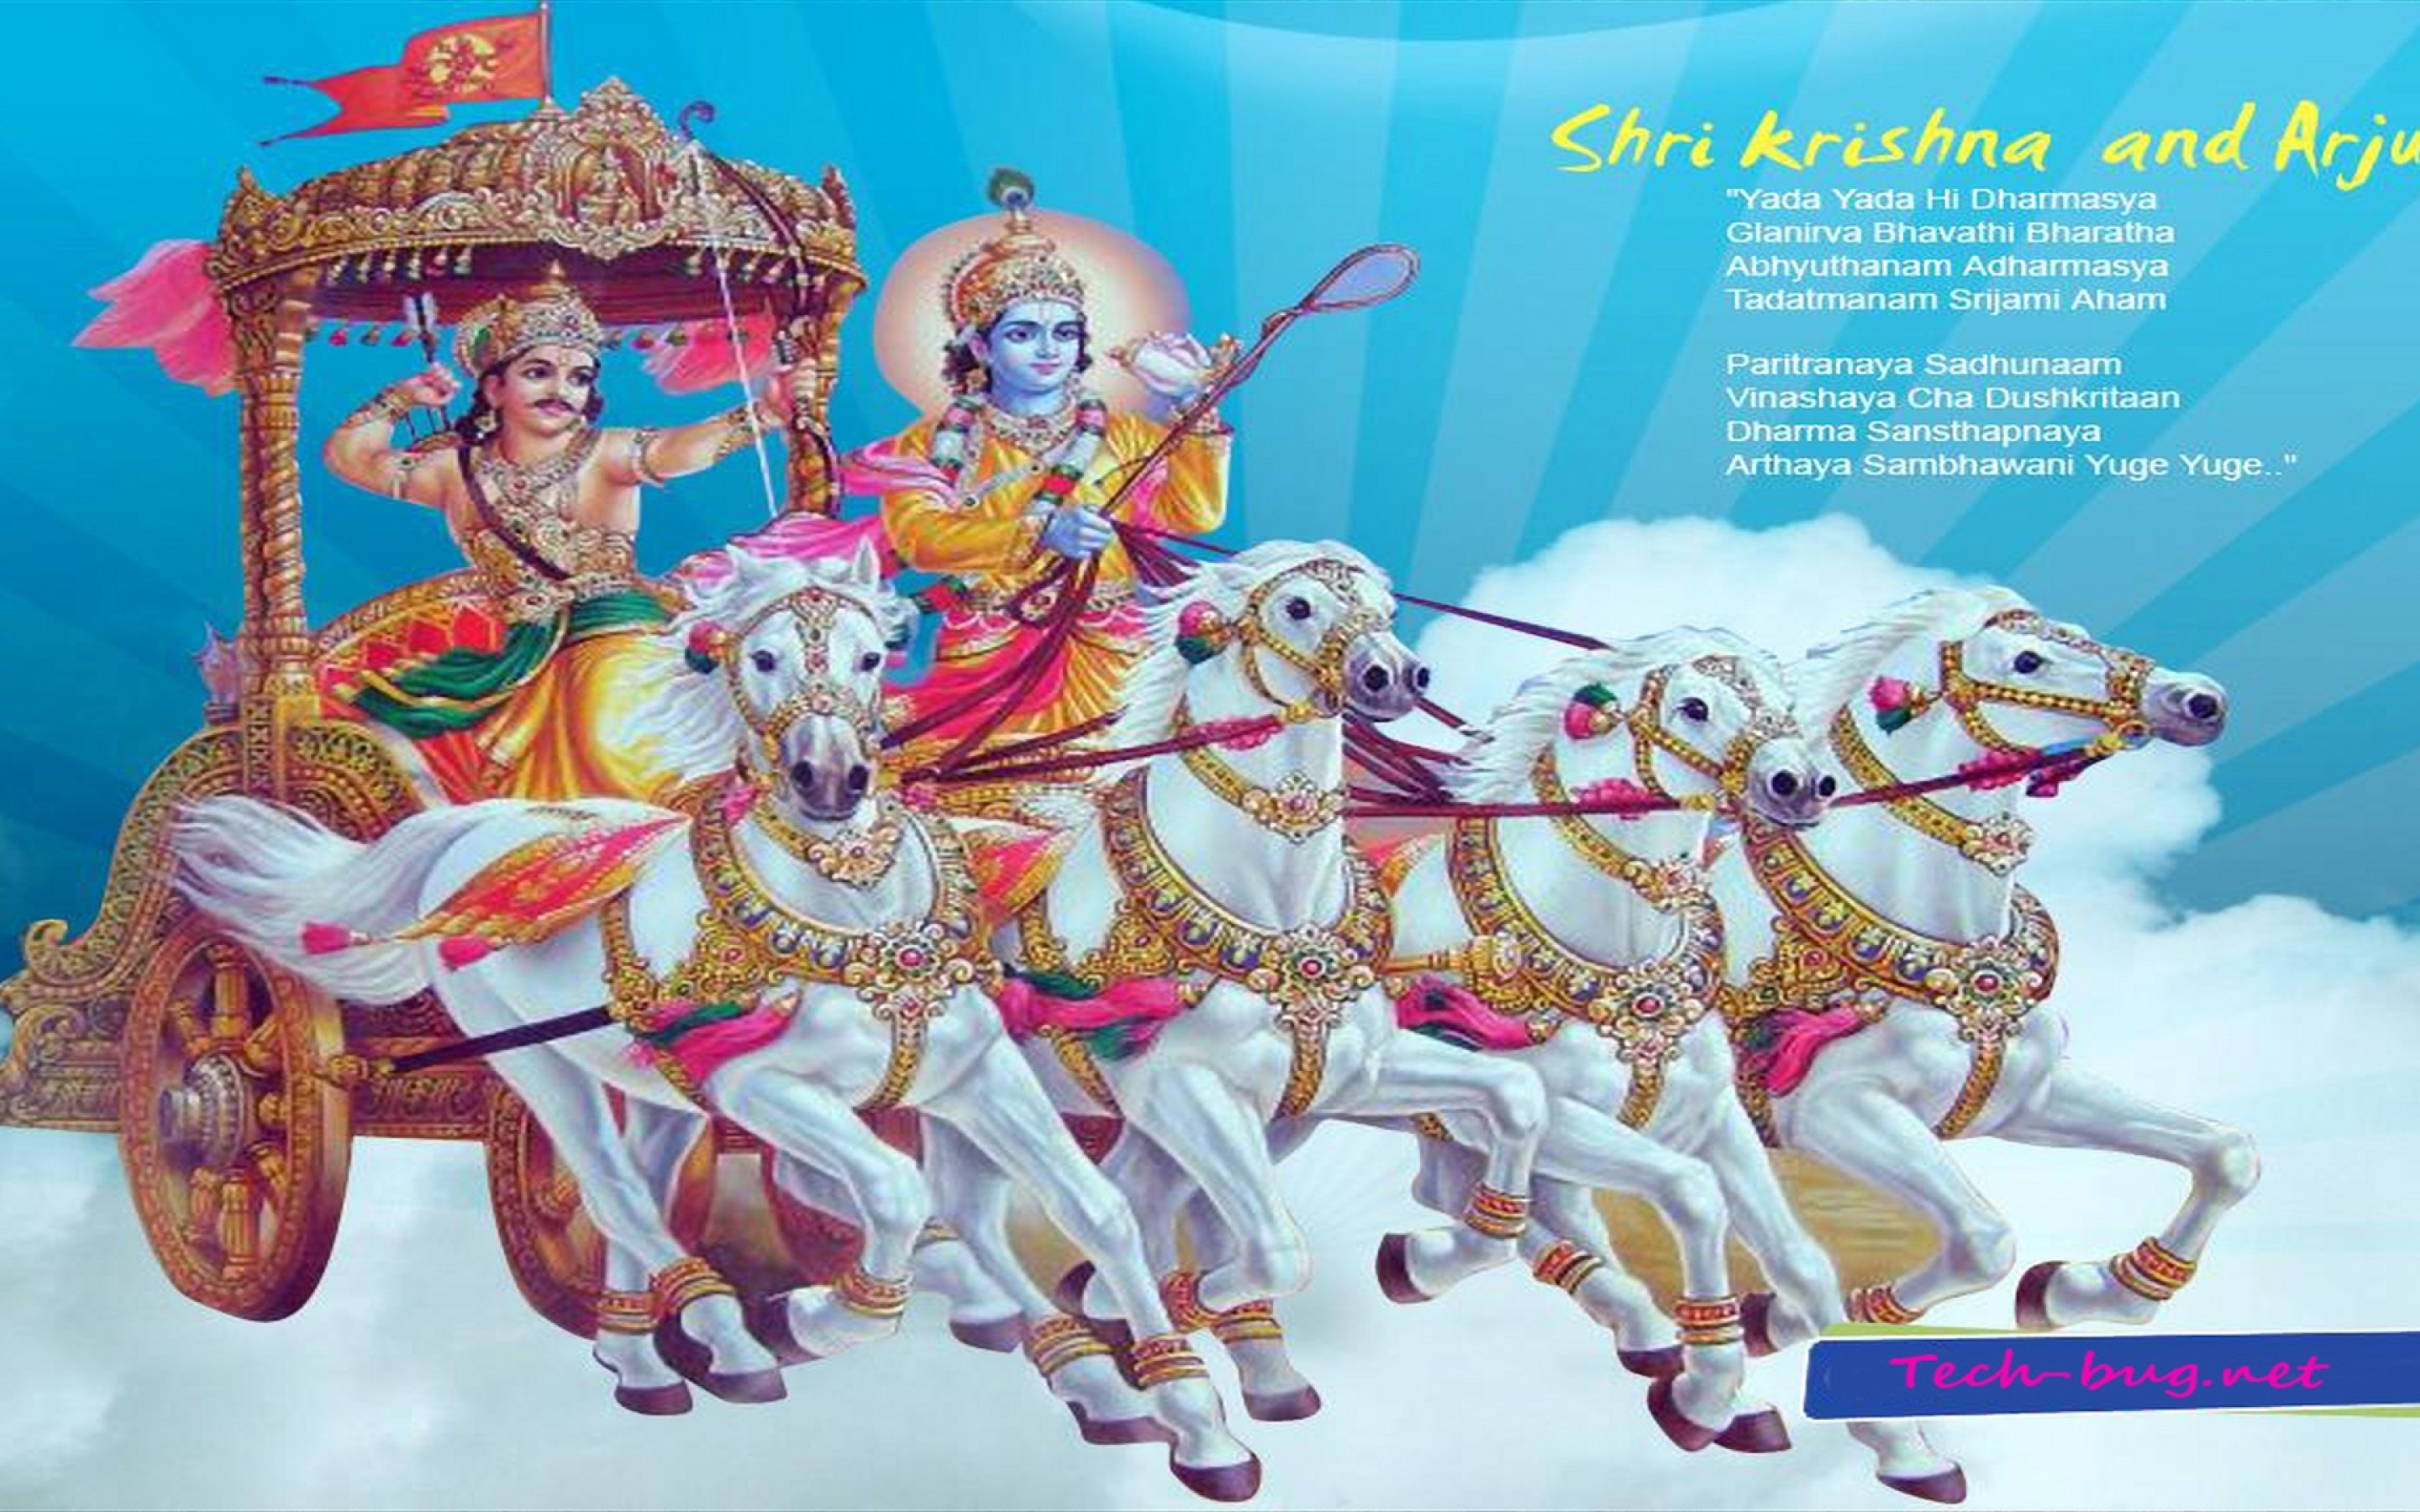 Download wallpaper for 240x320 resolution | Lord Krishna wallpaper | other  | Wallpaper Better